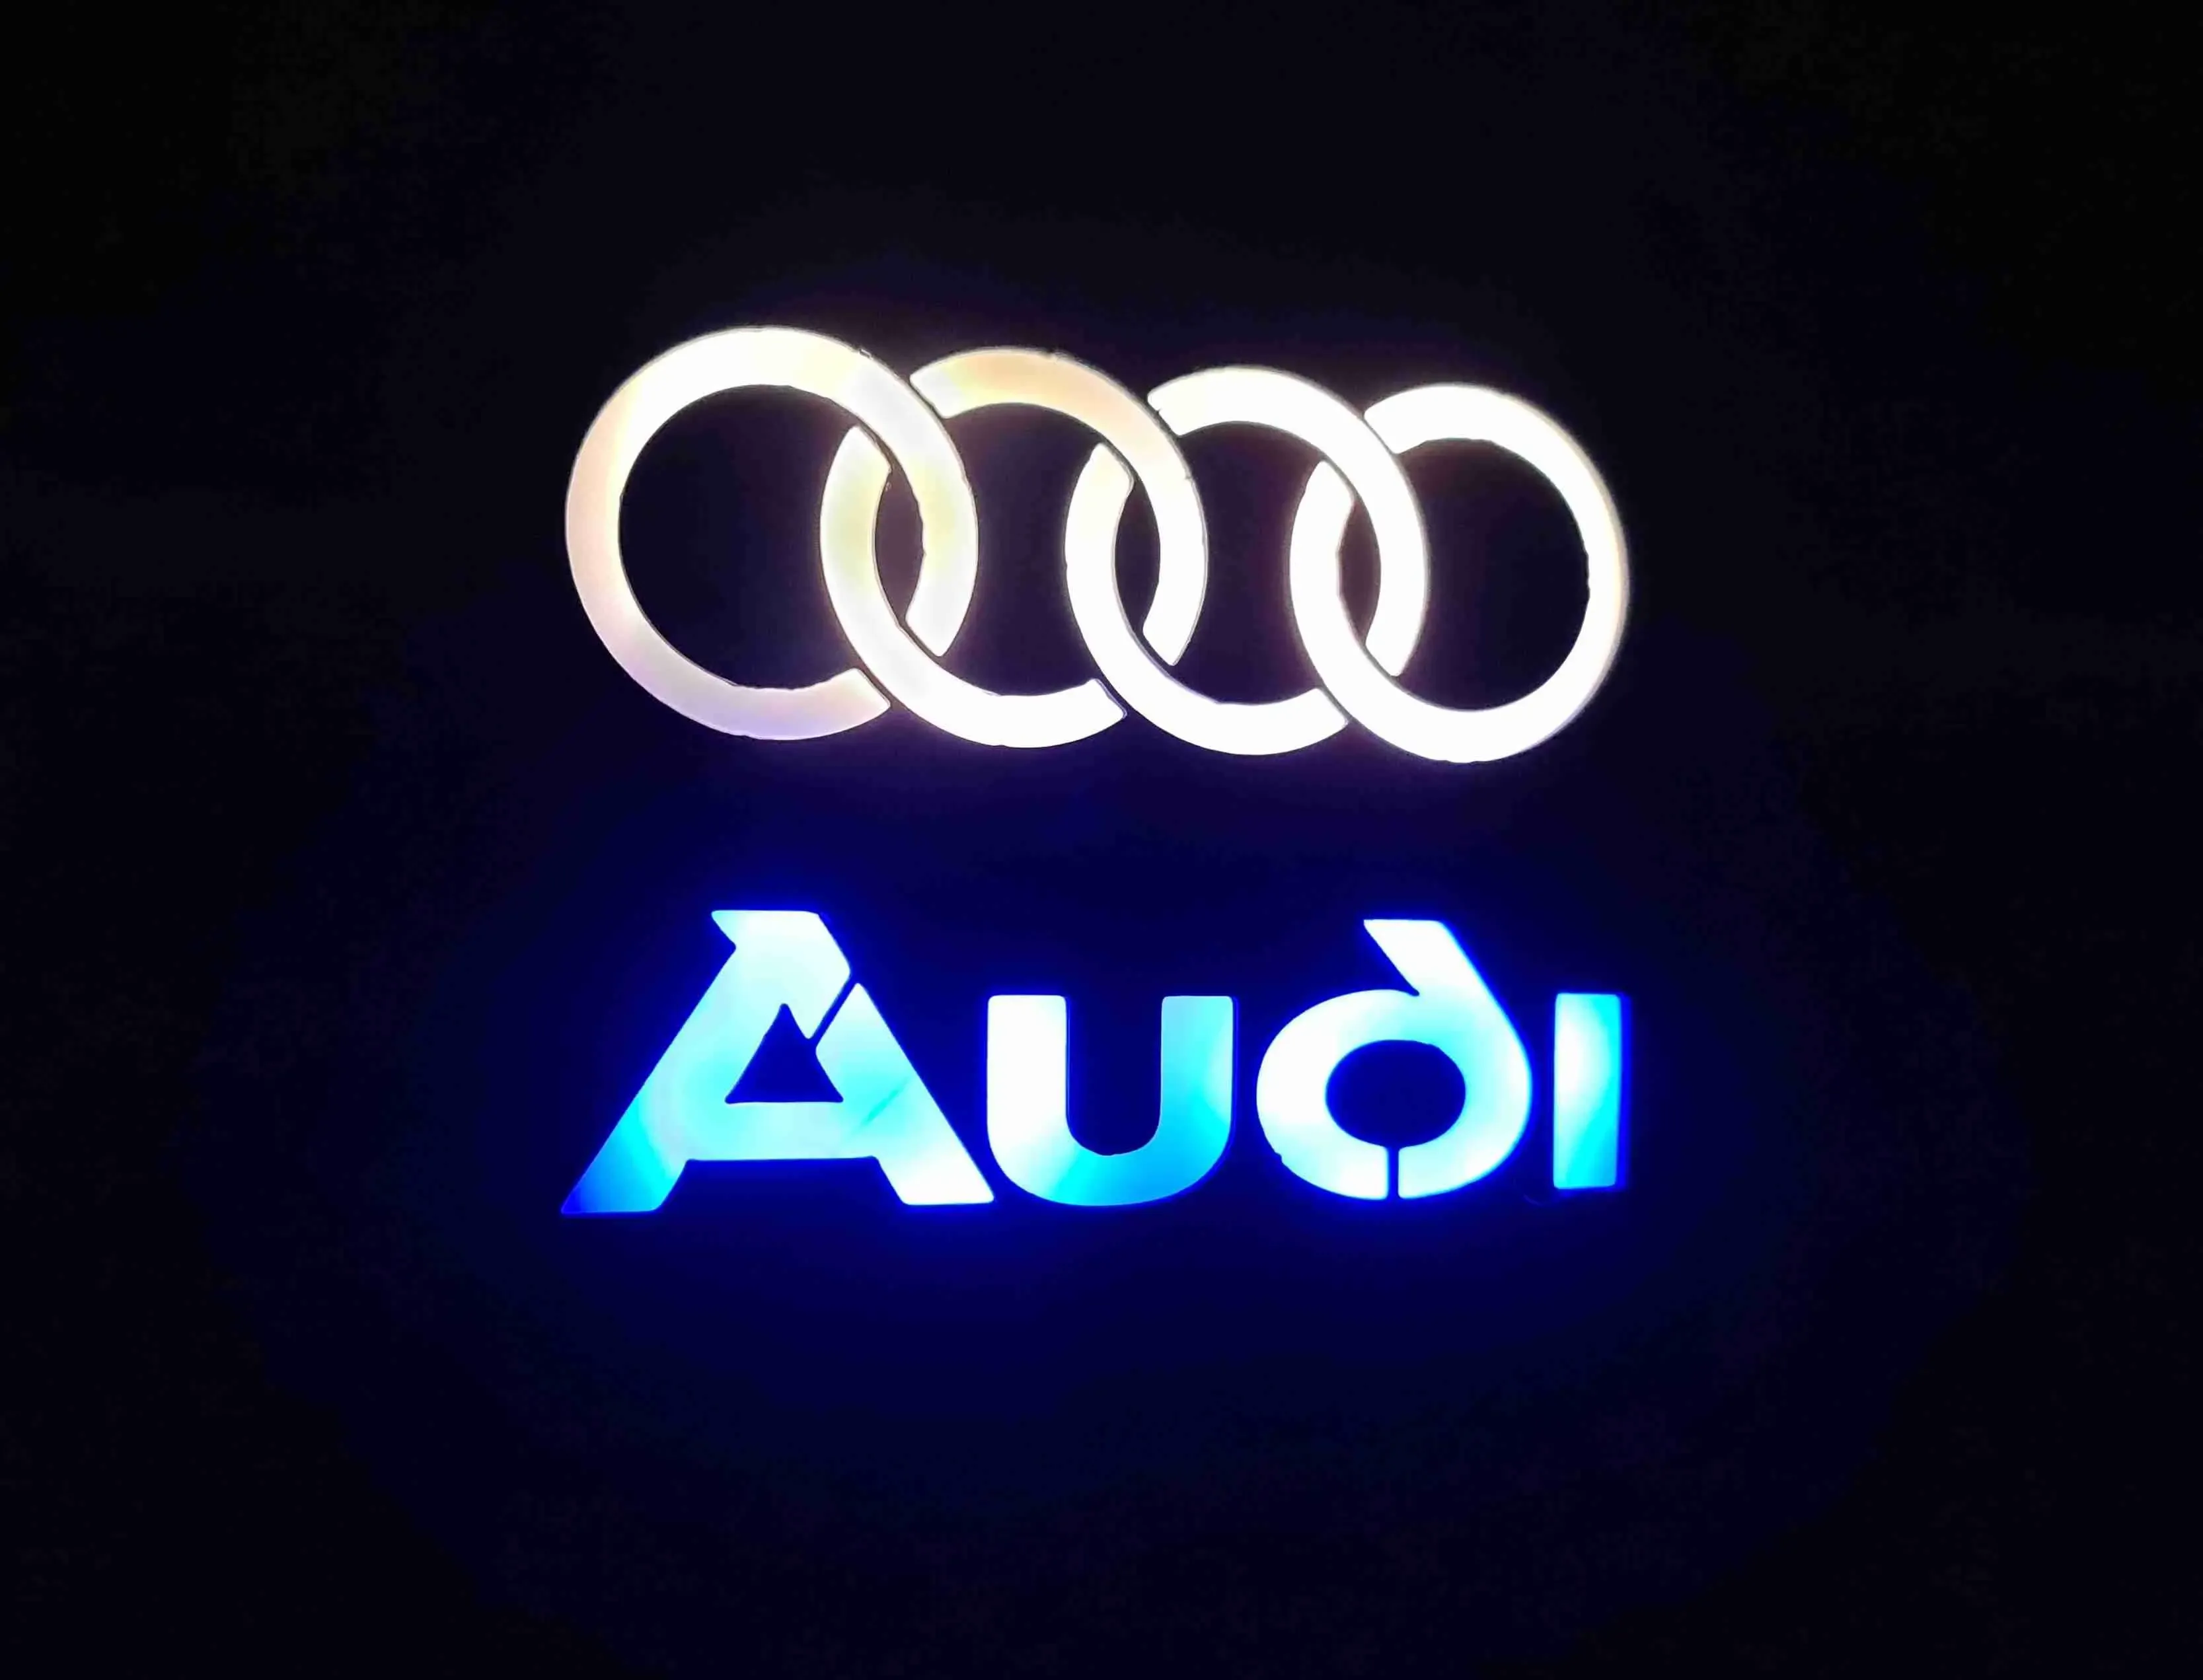 Audi LED Light Box Desk or Wall Mounted RS TT GT TTS QUATTRO